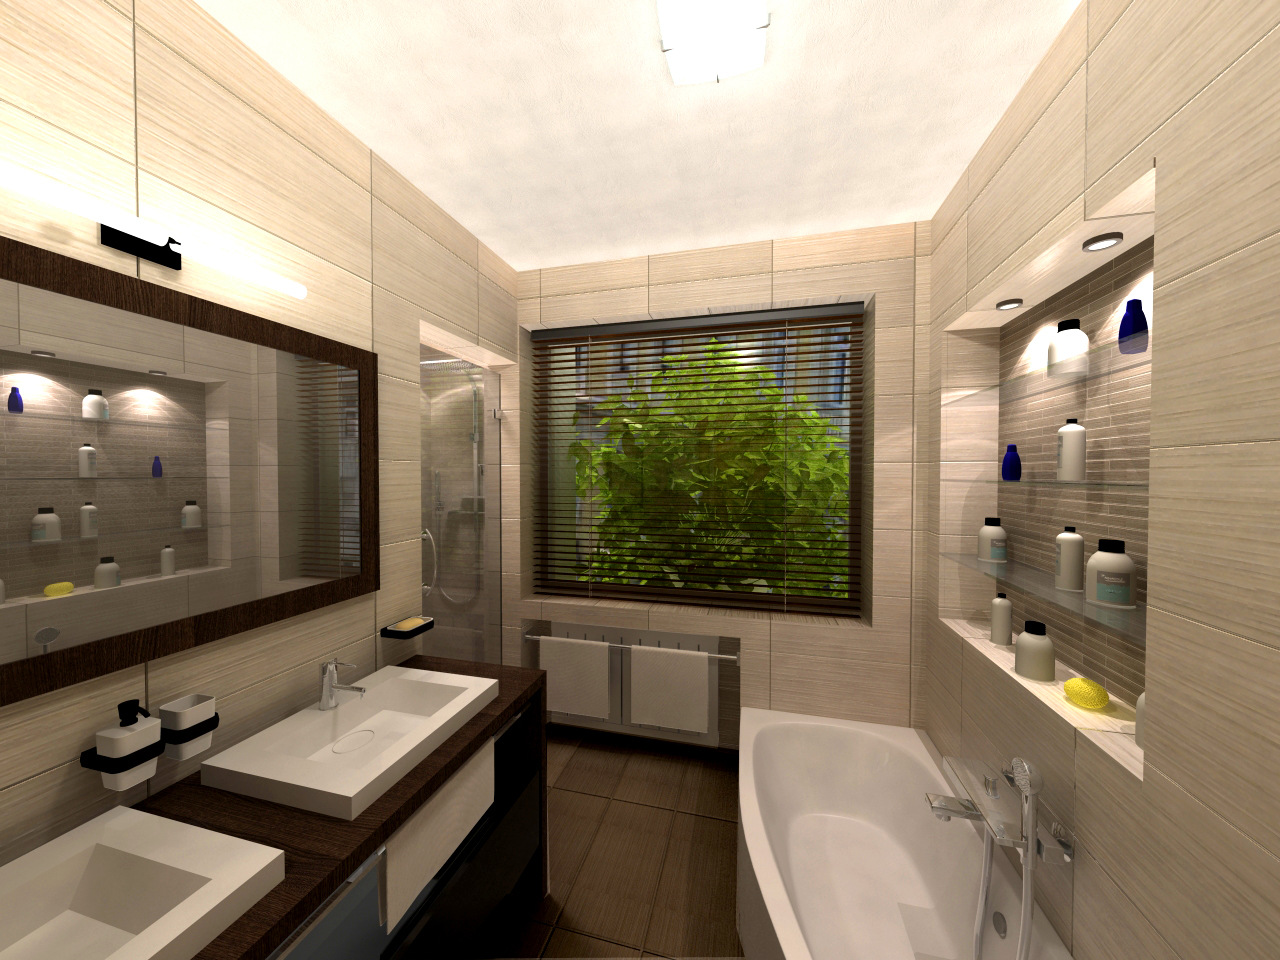 Fürdő - látványterv / Bathroom - visualization